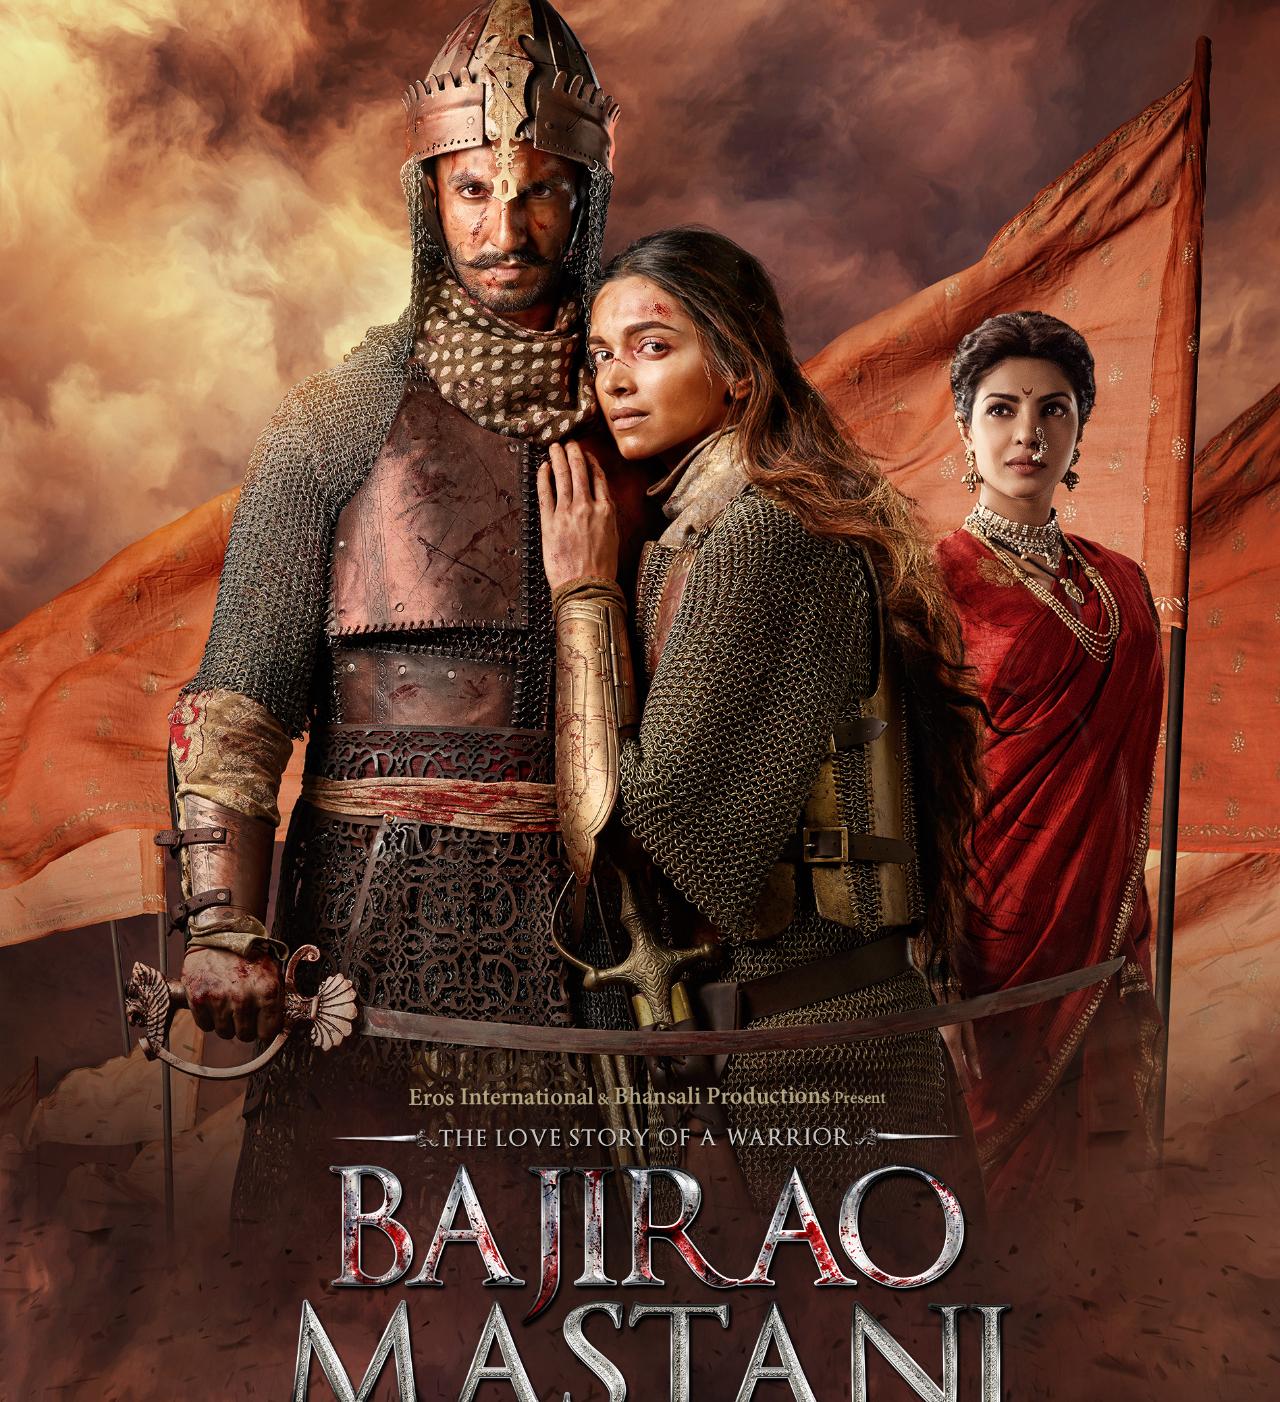 At a rating of 7.2, the 2015 Sanjay Leela Bhansali film 'Bajirao Mastani' is among Priyanka's highest-rated films. The film also stars Deepika Padukone and Ranveer Singh